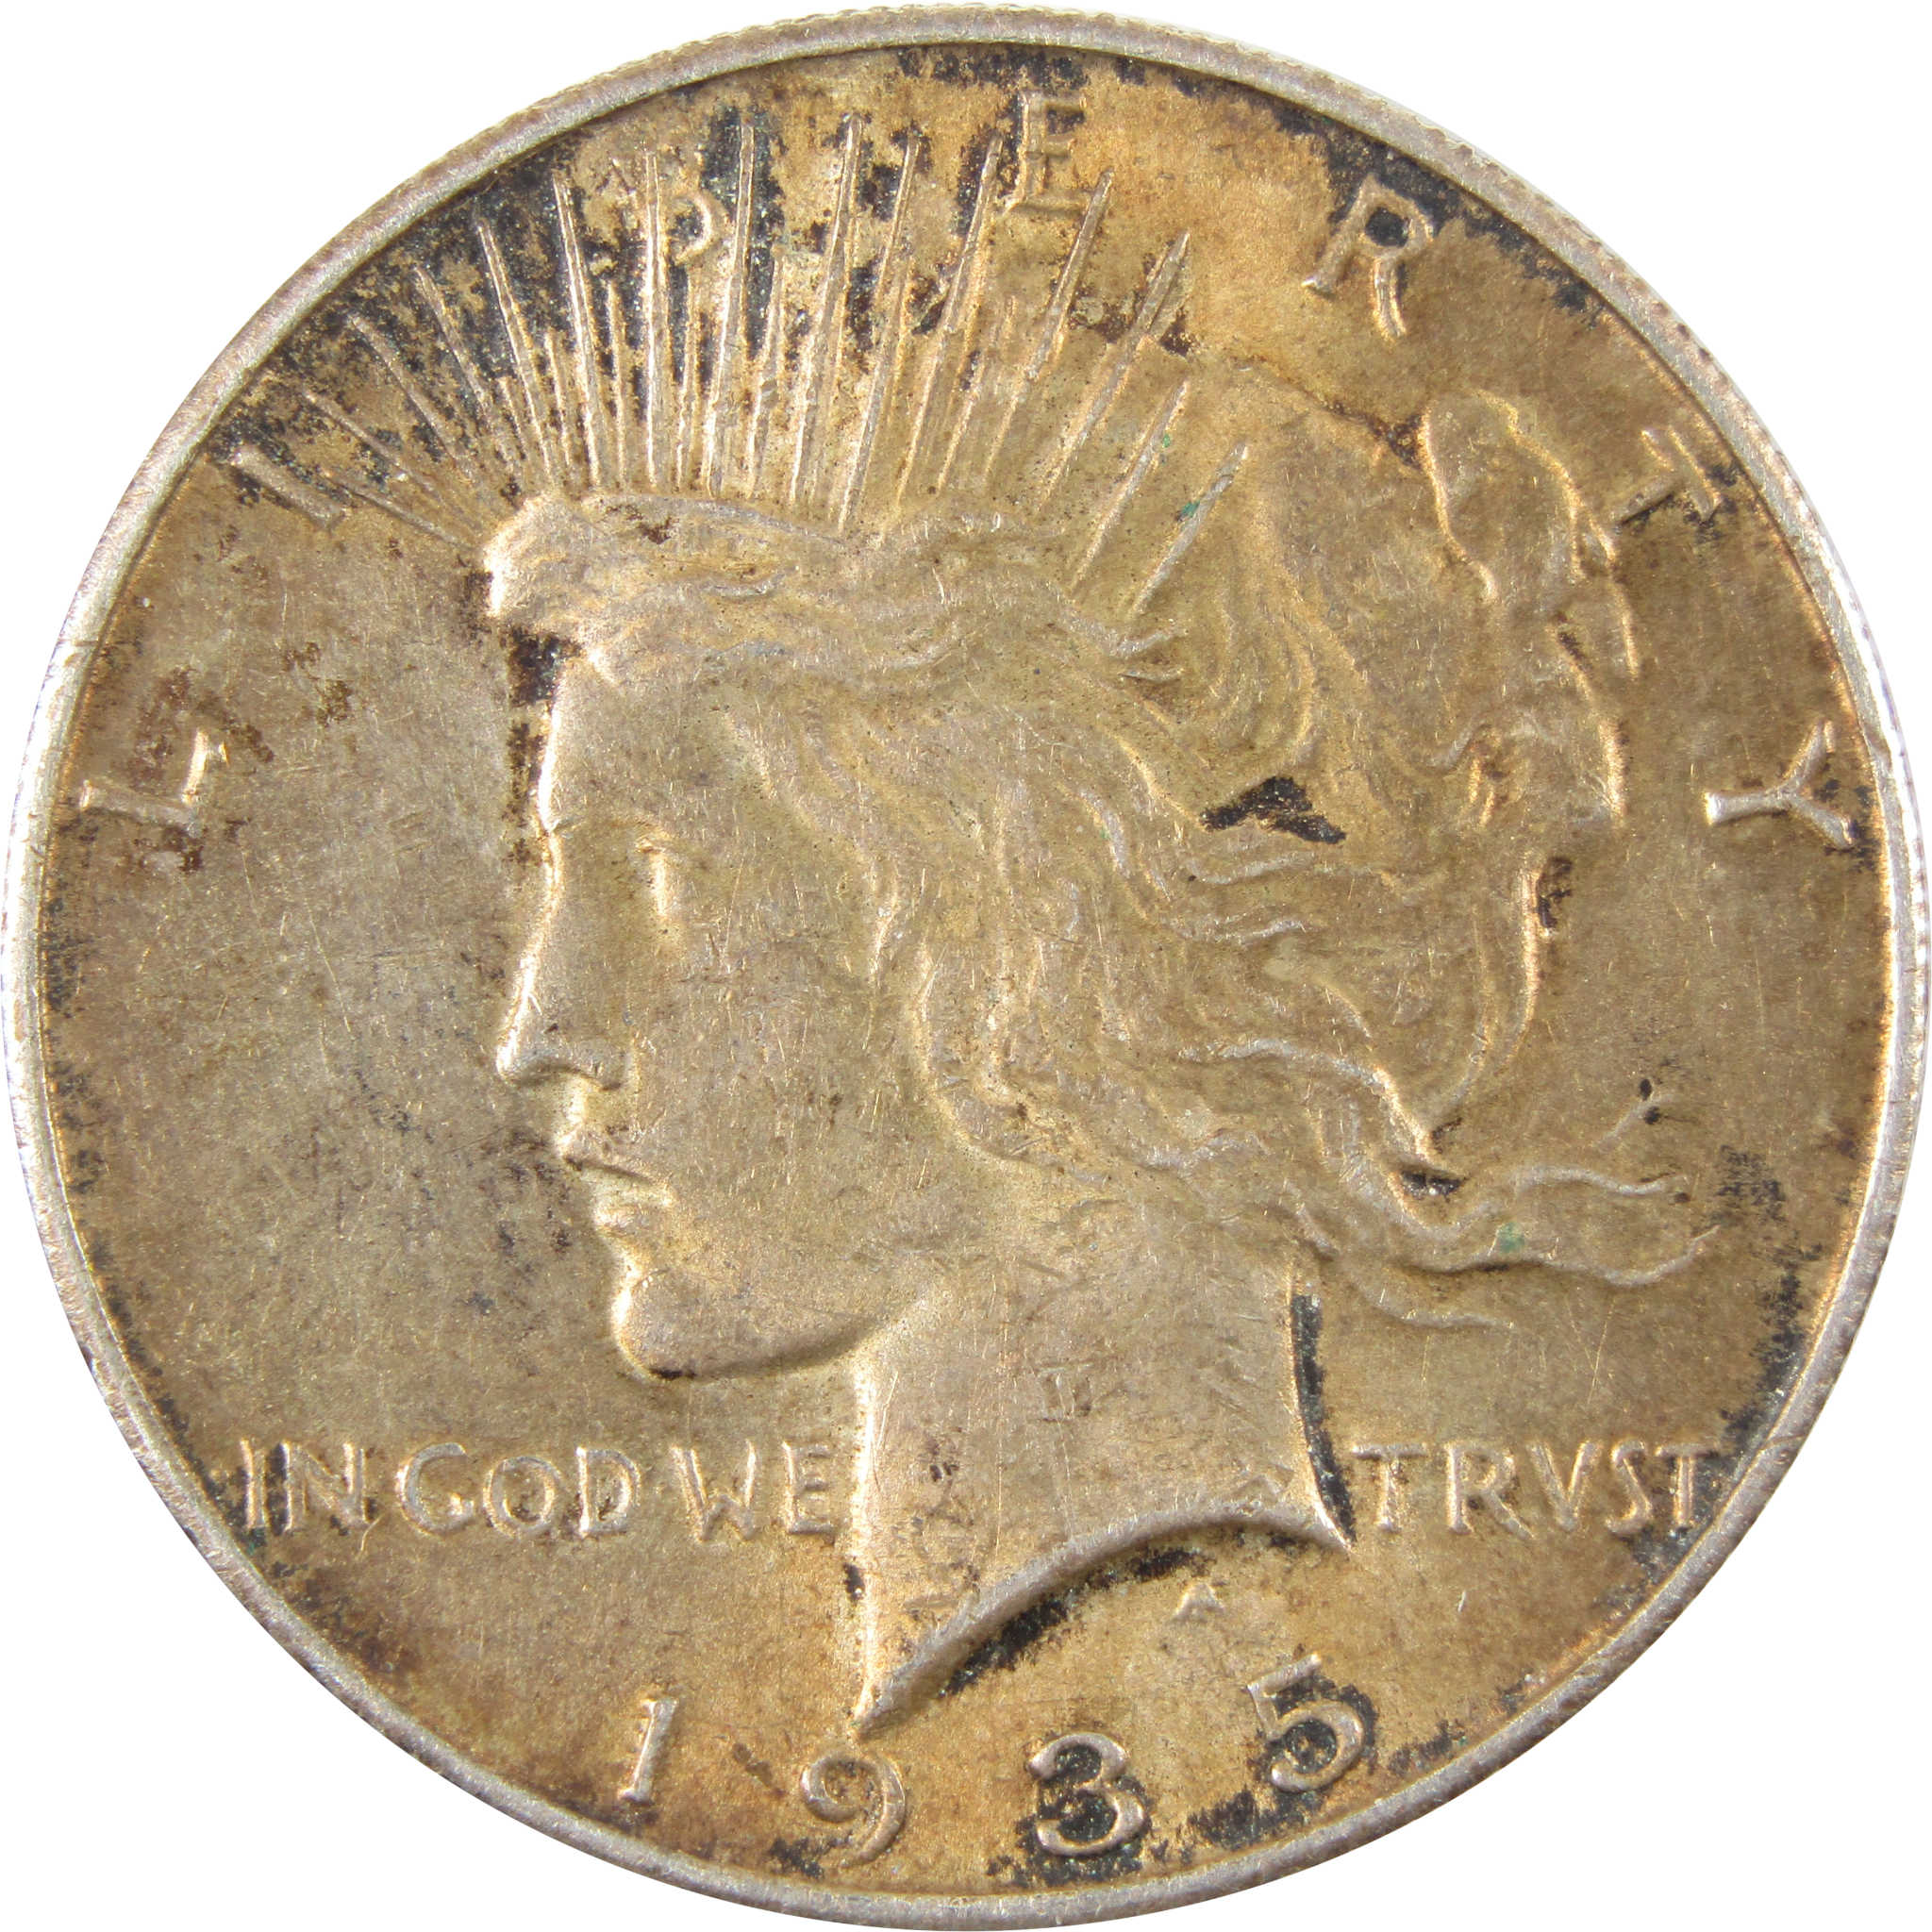 1935 S Peace Dollar Borderline Uncirculated 90% Silver $1 SKU:I7459